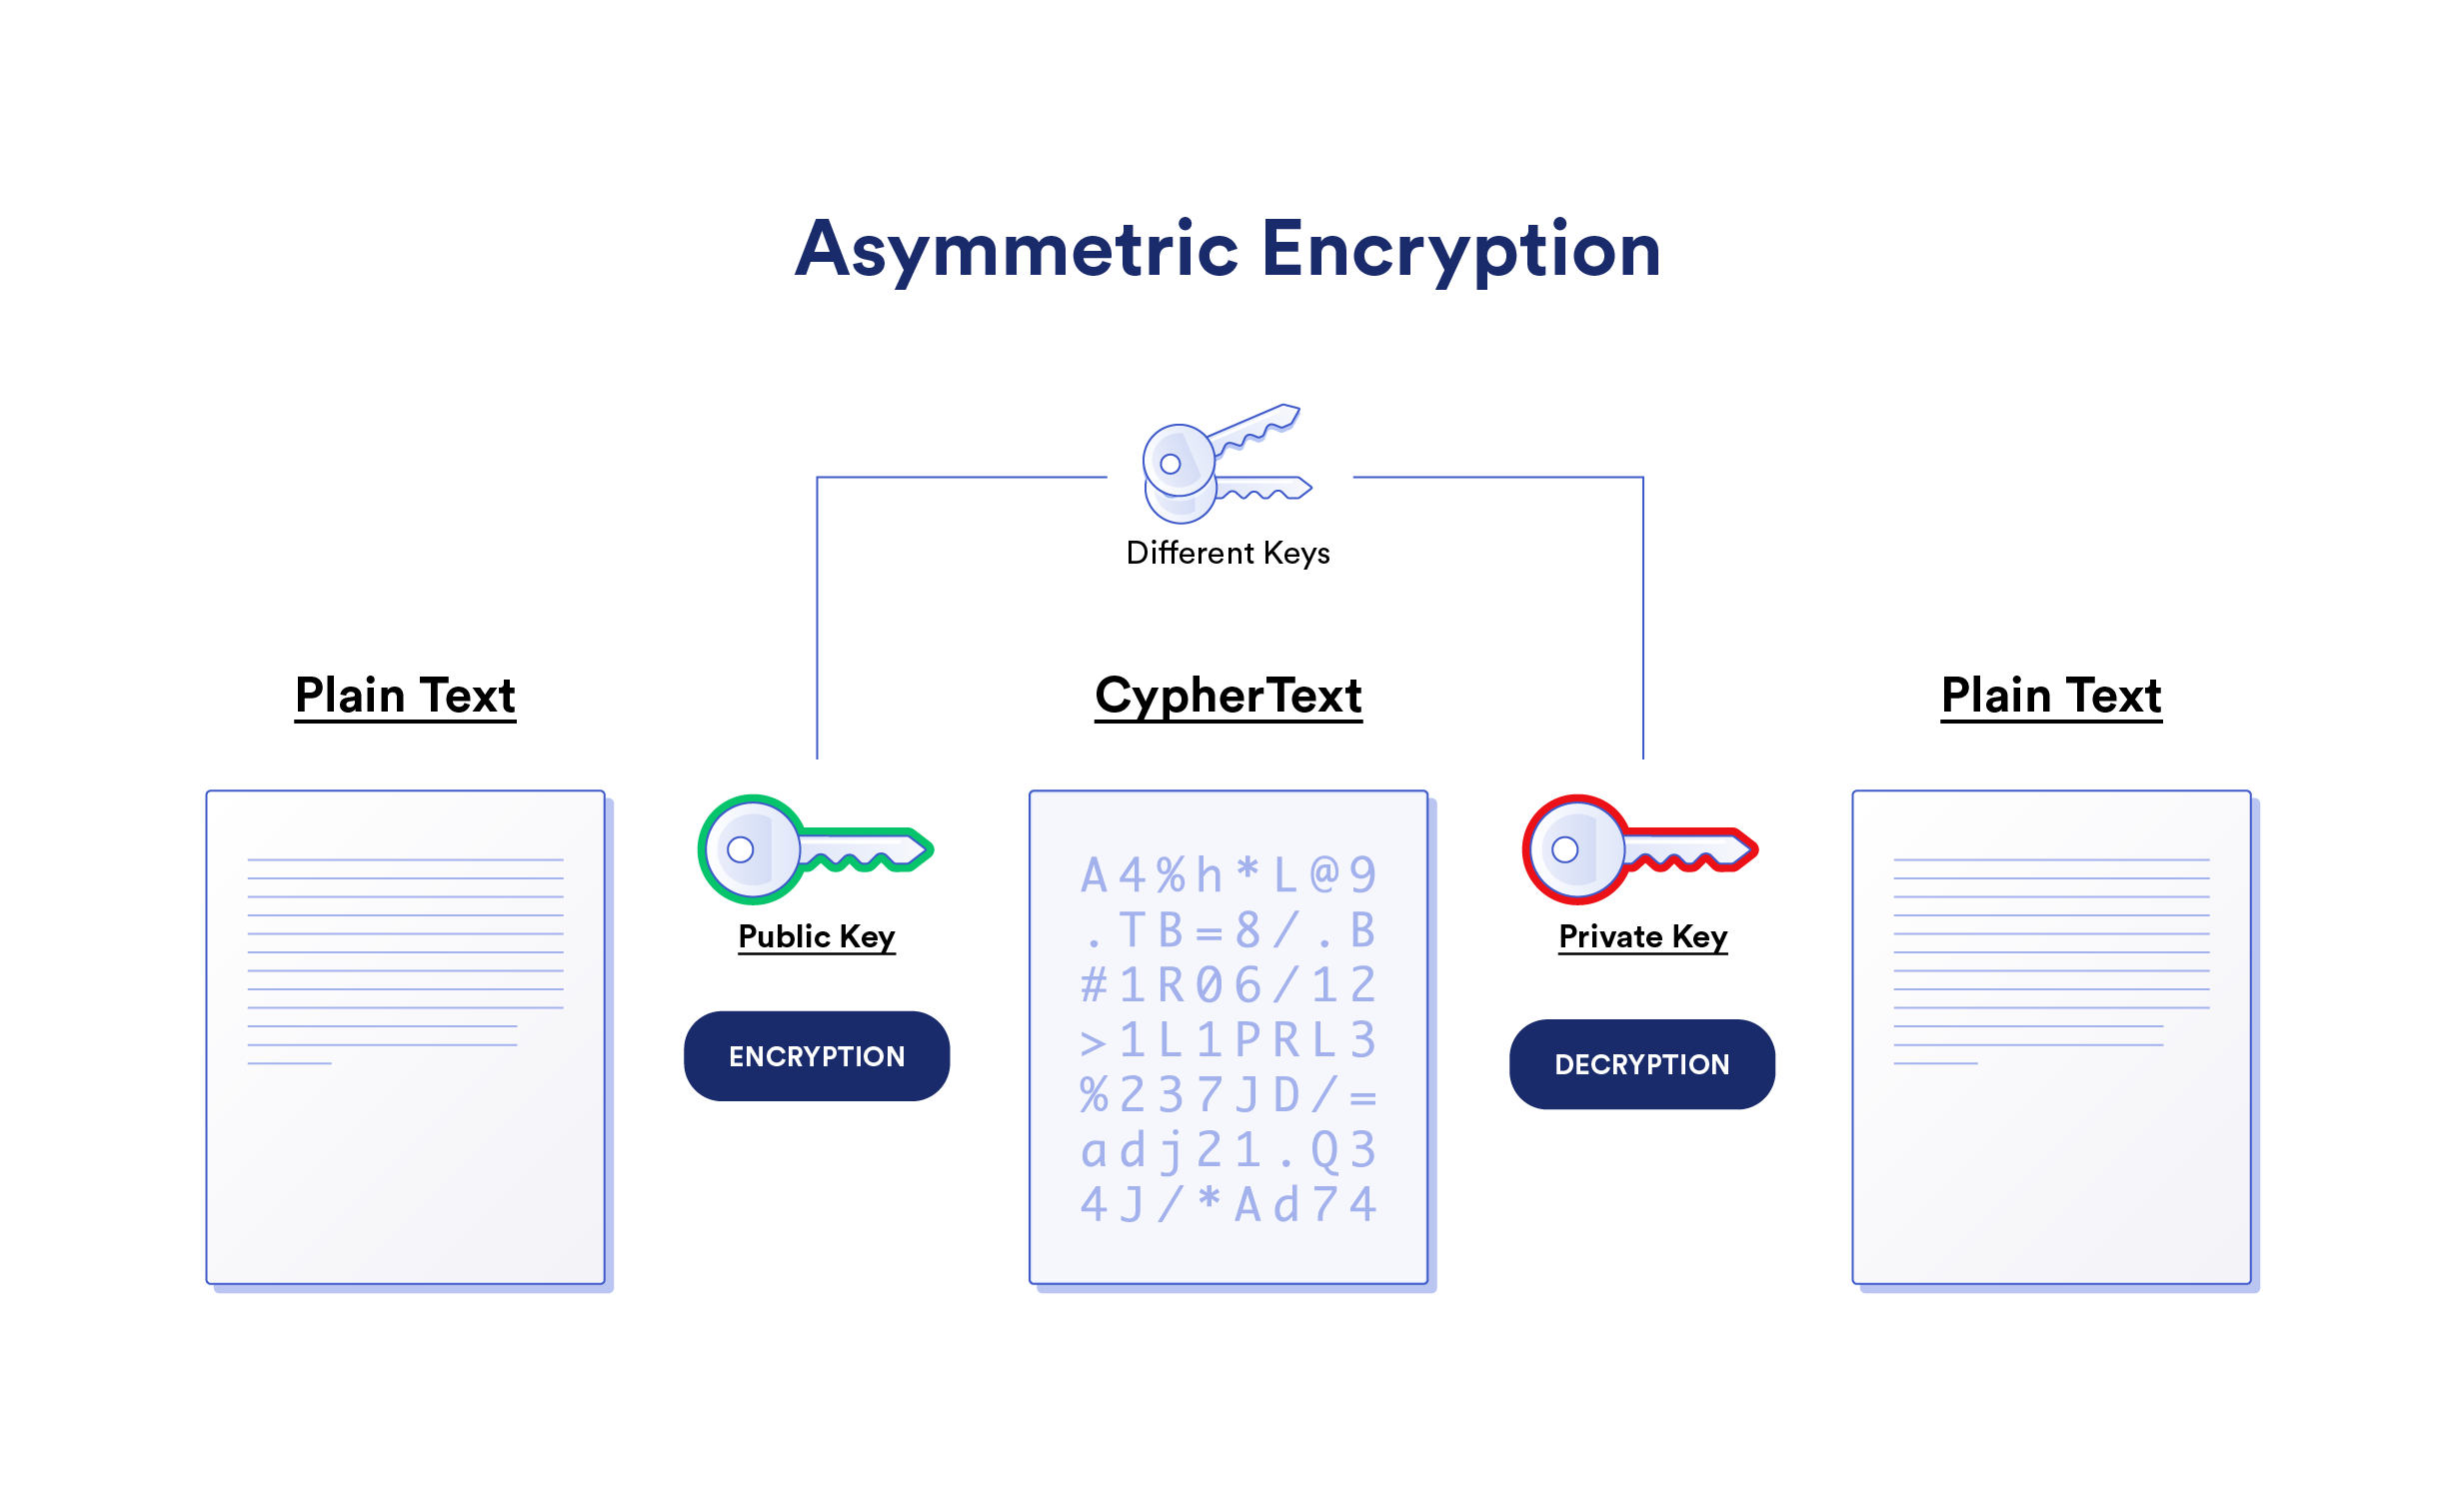 A diagram showing how asymmetric key encryption works. 